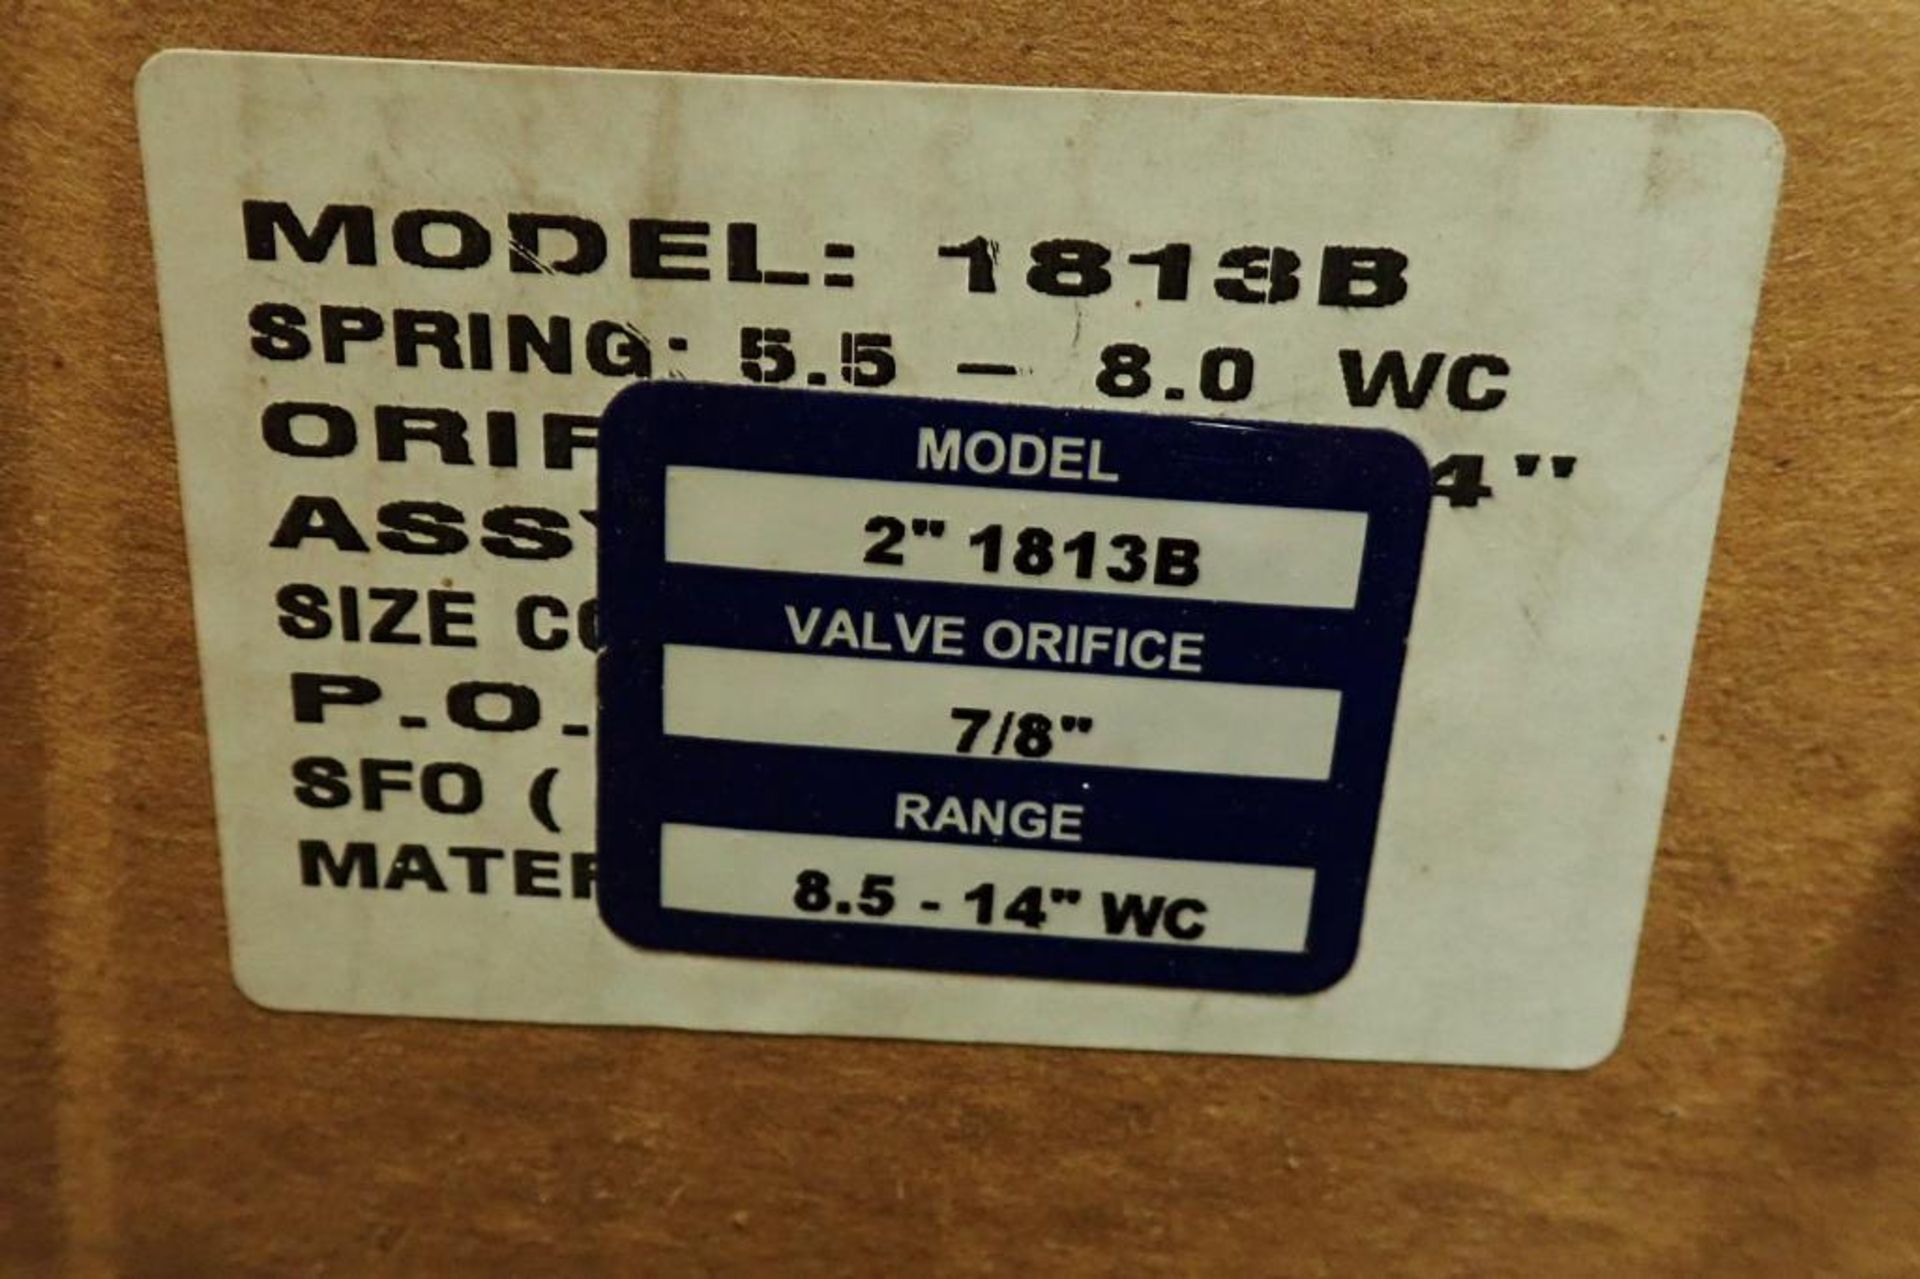 Unused American Meter Company gas regulator, Model 2 in. 1813B, 7/8 in. valve orifice, 1800/2000 ser - Image 6 of 6